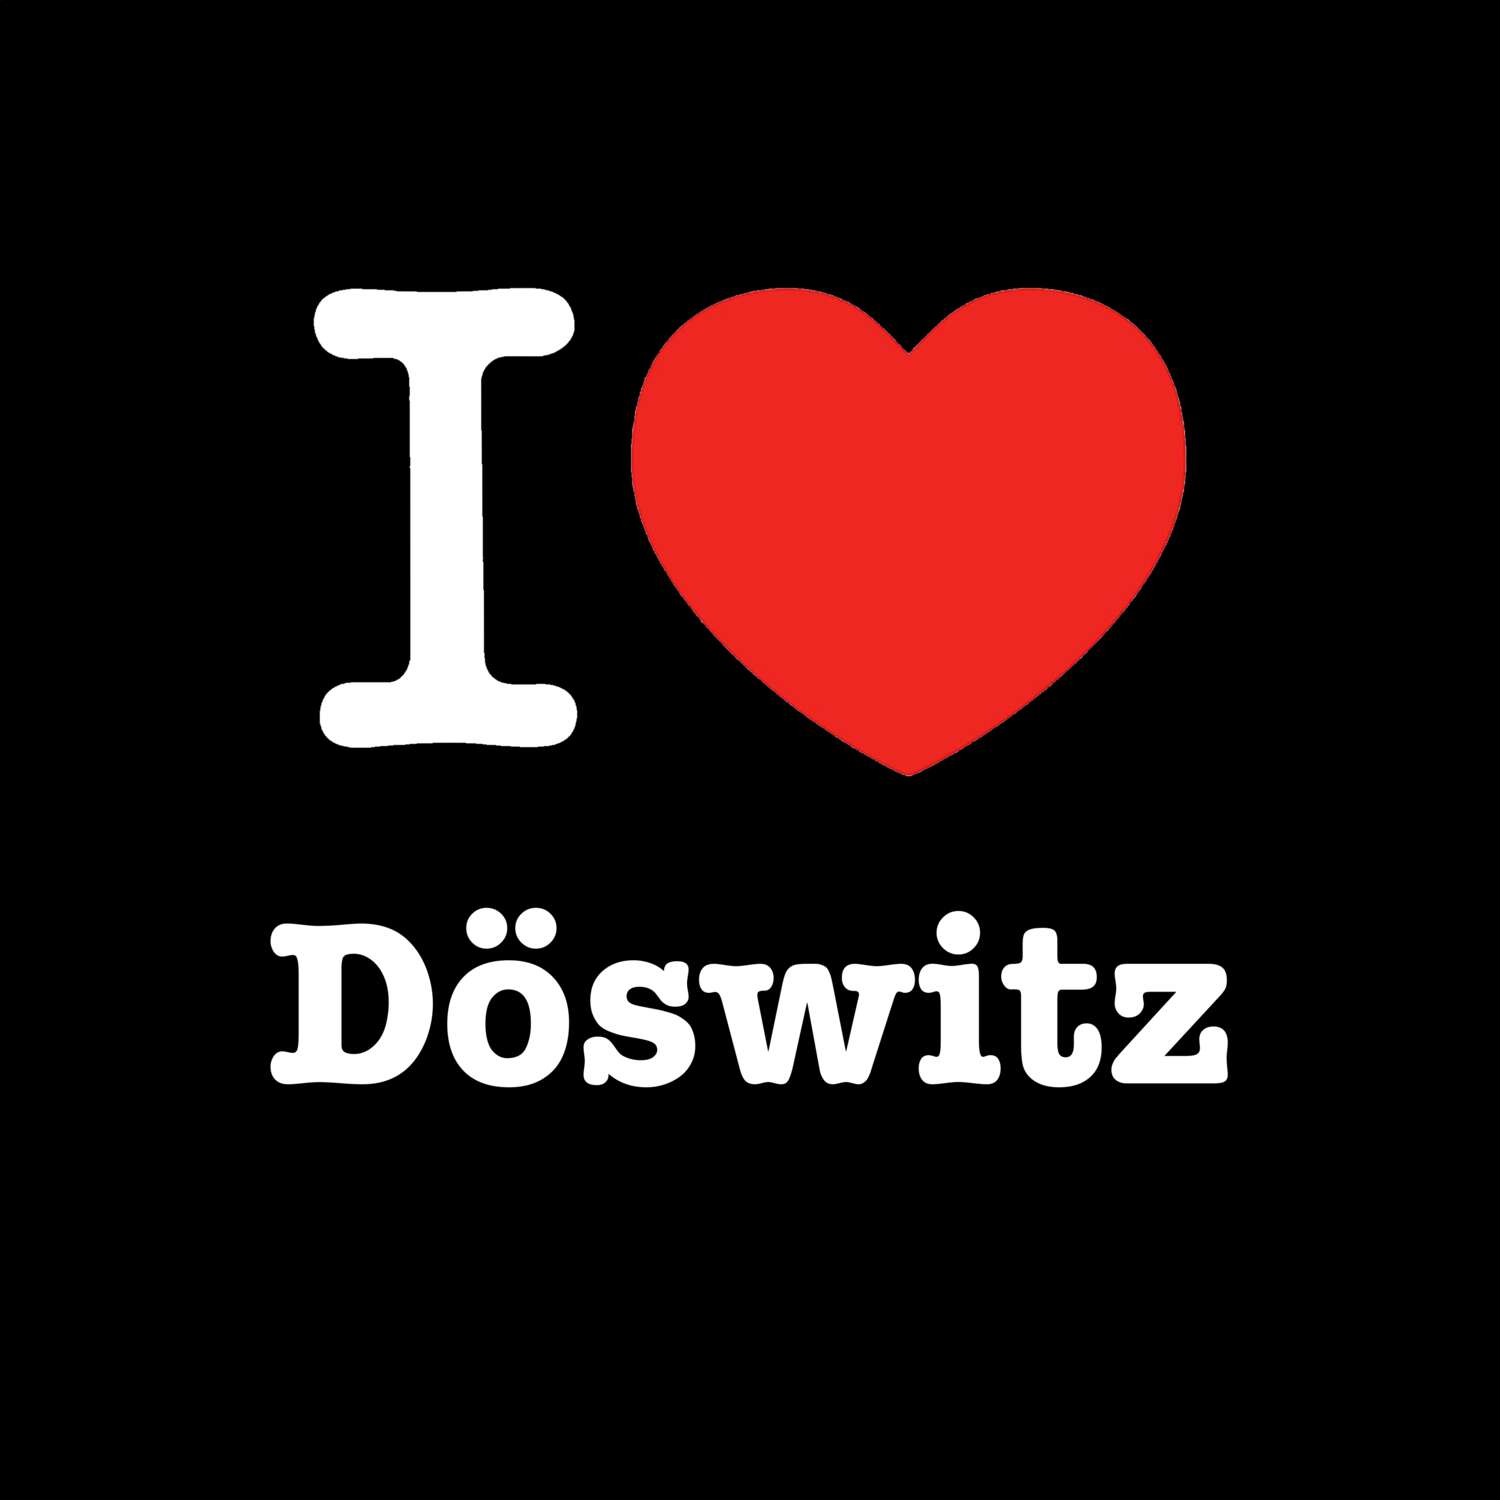 Döswitz T-Shirt »I love«